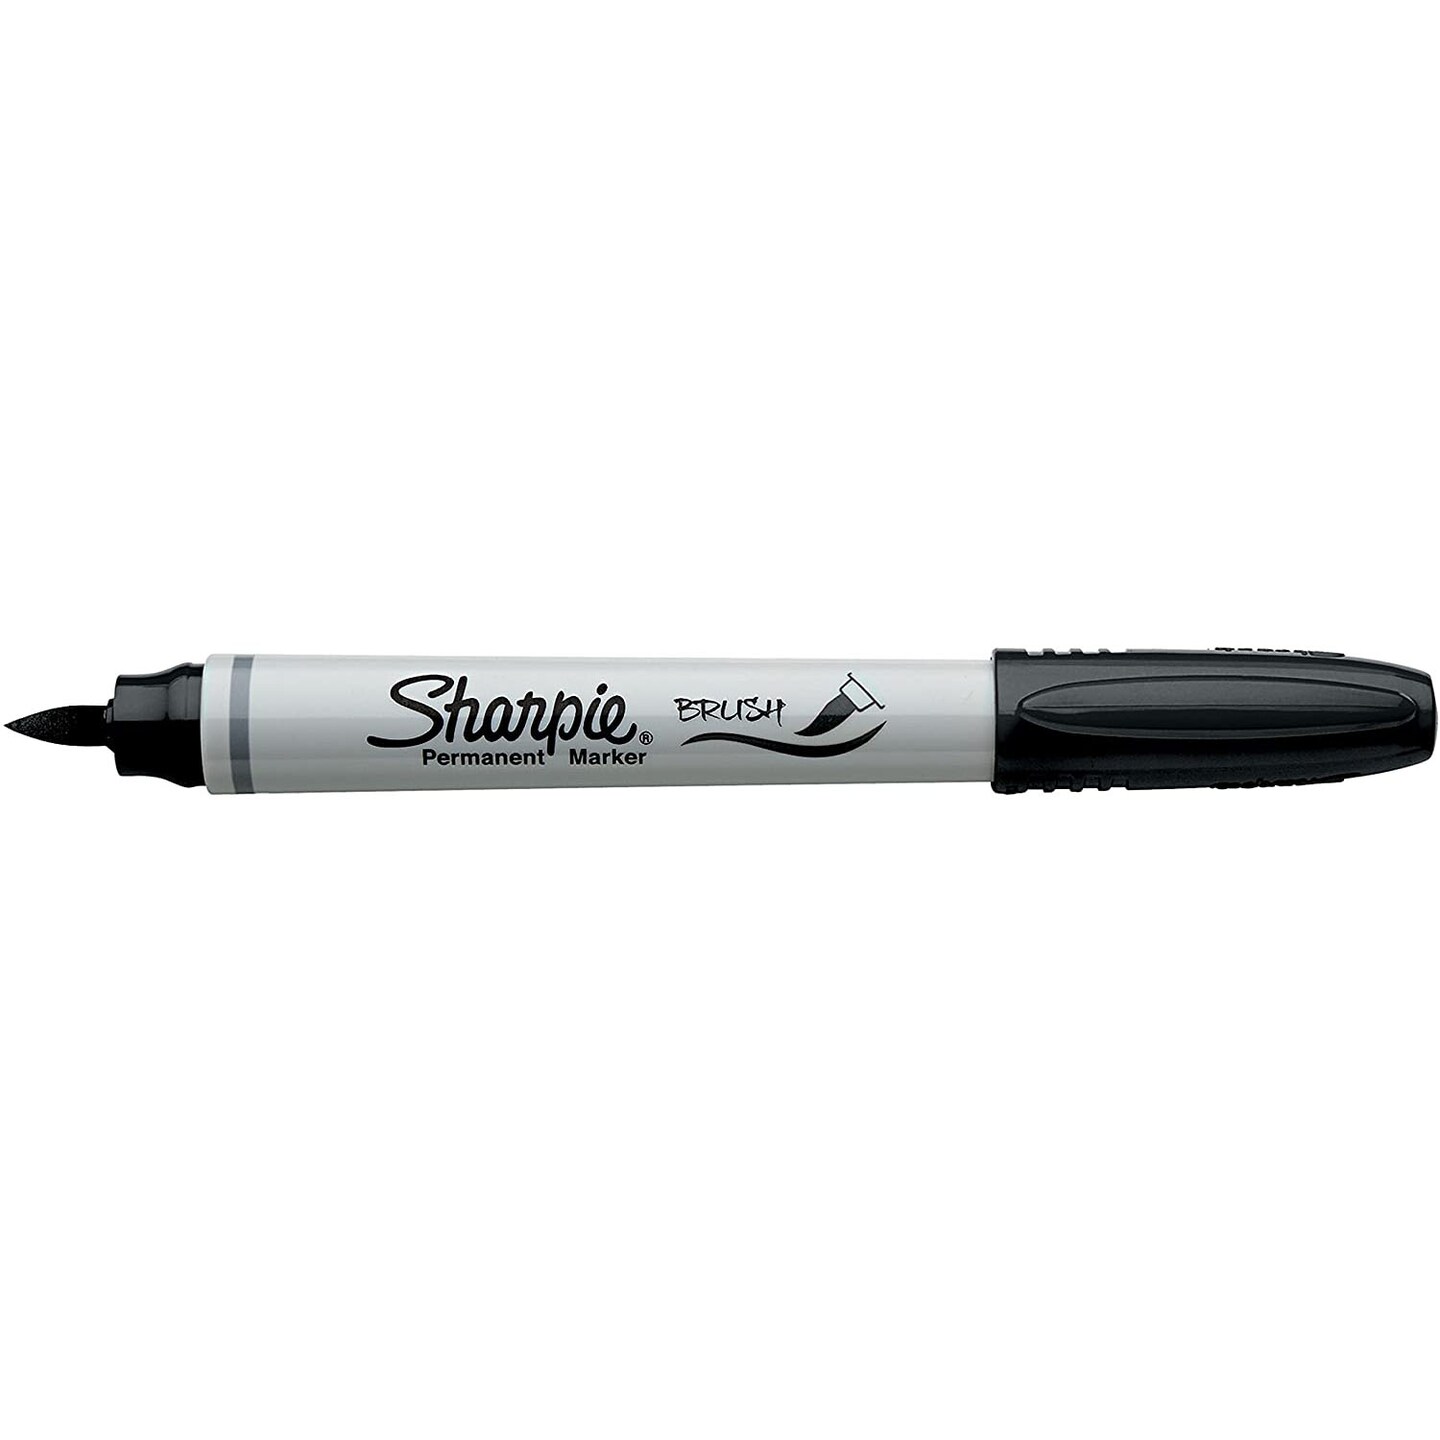 Sharpie Permanent Marker, Brush Tip, Black, 1-Count